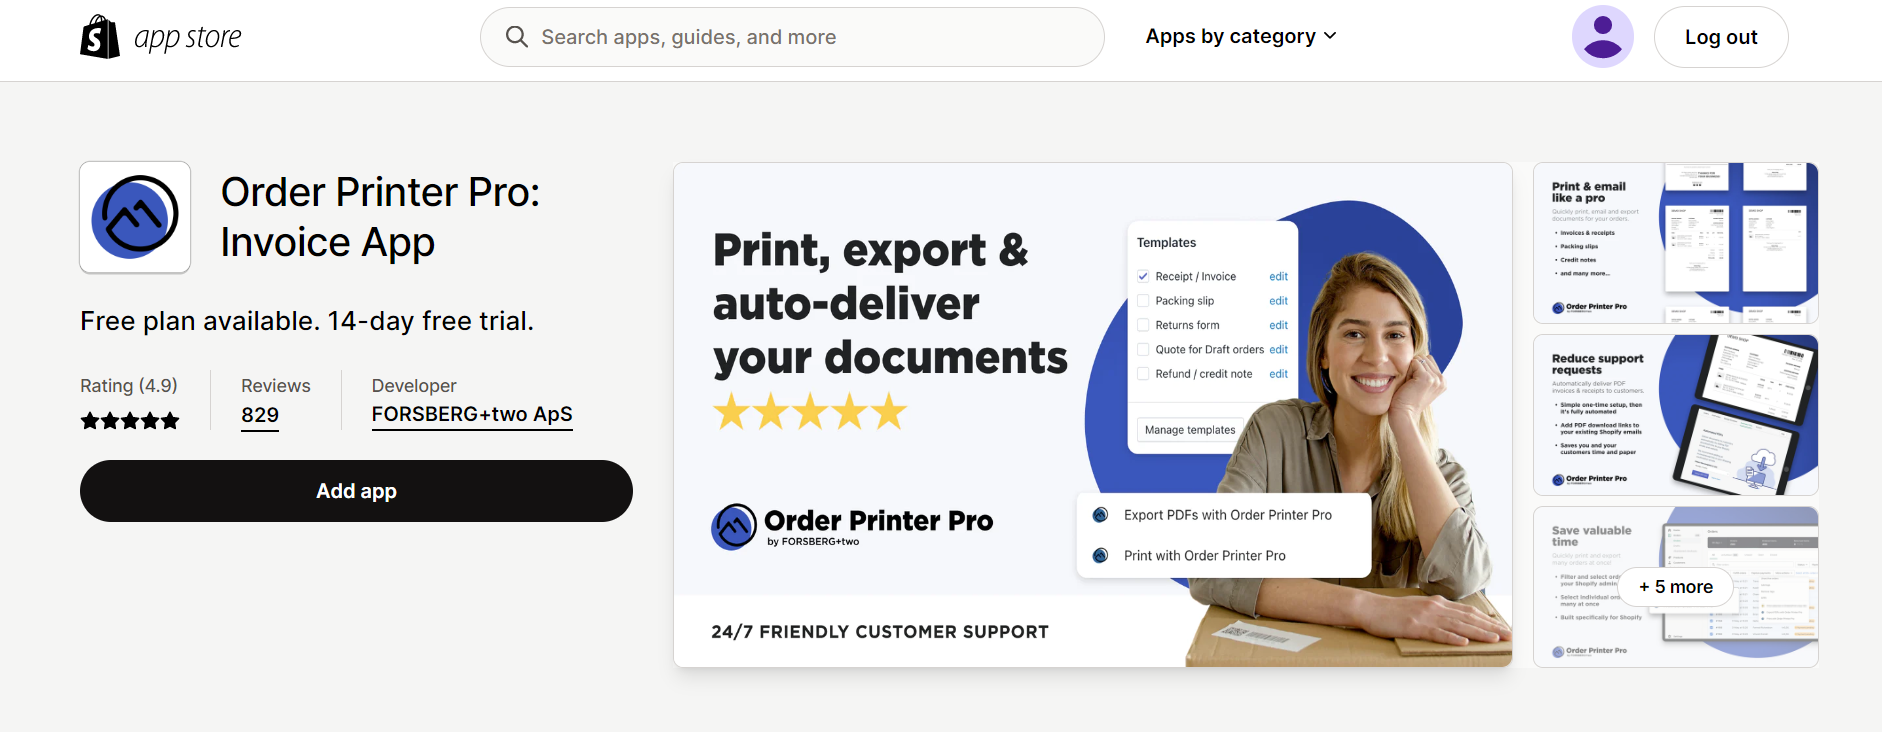 Order Printer Pro: Invoice App
